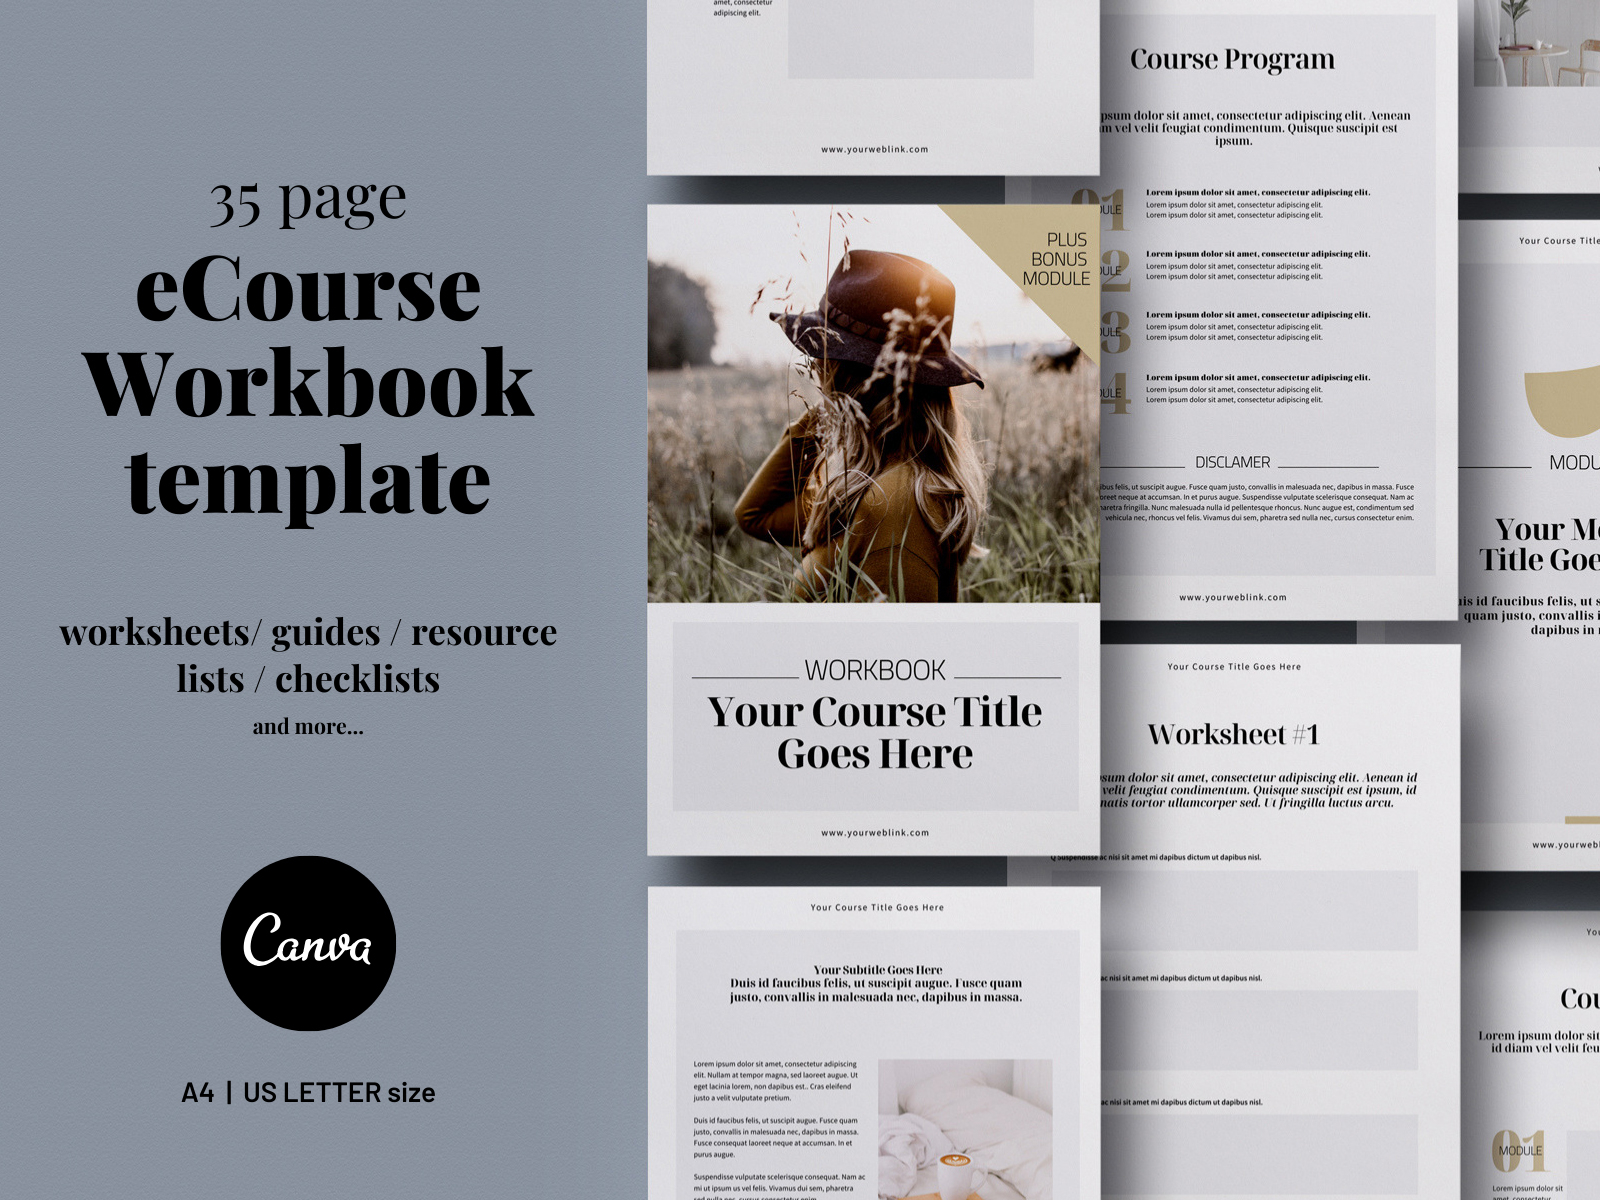 ecourse-workbook-canva-template-by-olga-davydova-on-dribbble